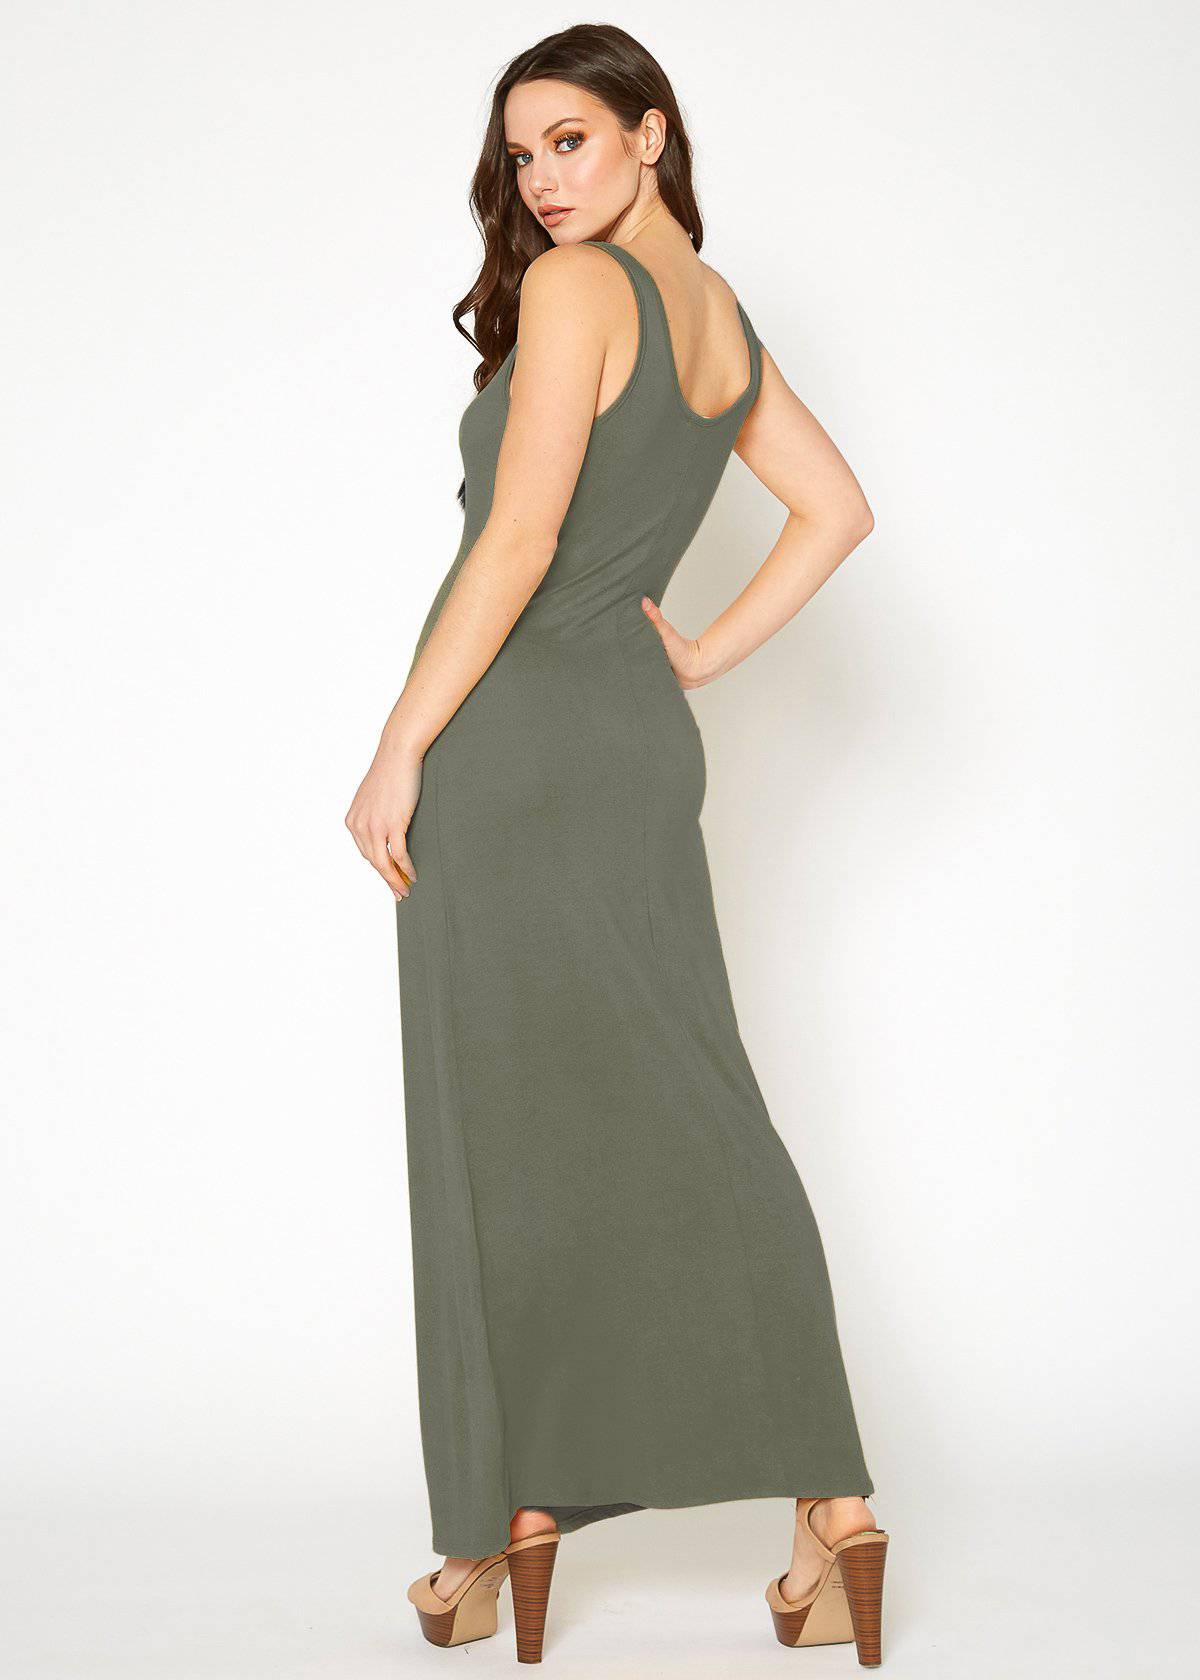 Women's Sleeveless Scoop Neck Maxi Dress by Shop at Konus